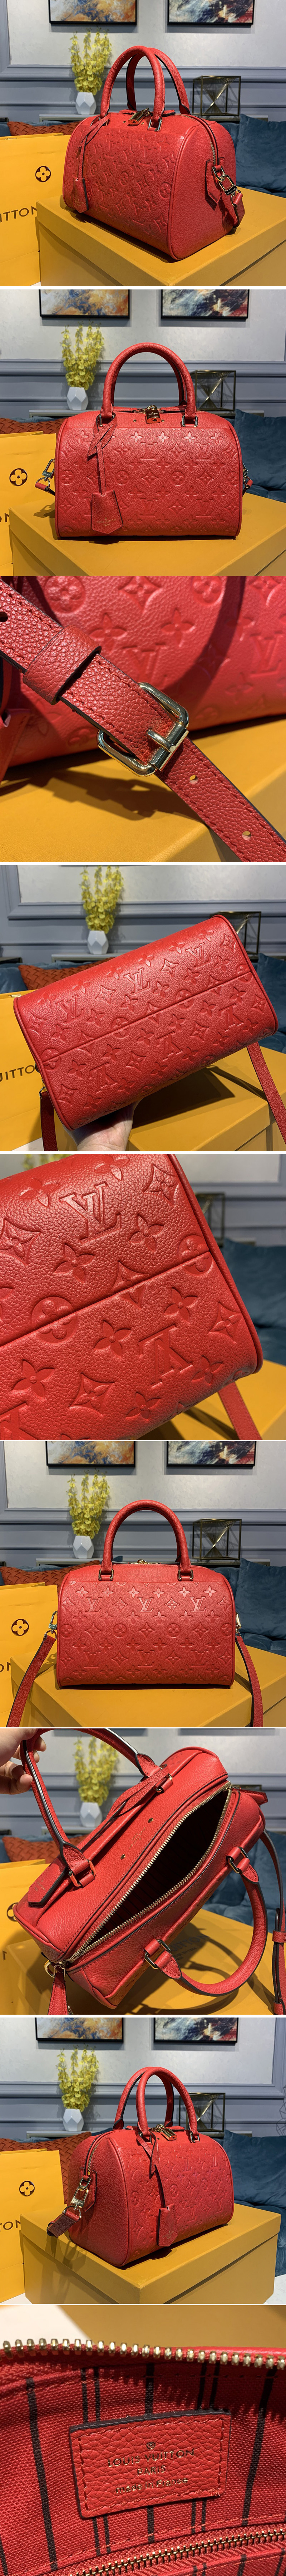 Replica Louis Vuitton M42401 Speedy Bandouliere 25 handbag in Red Monogram Empreinte leather